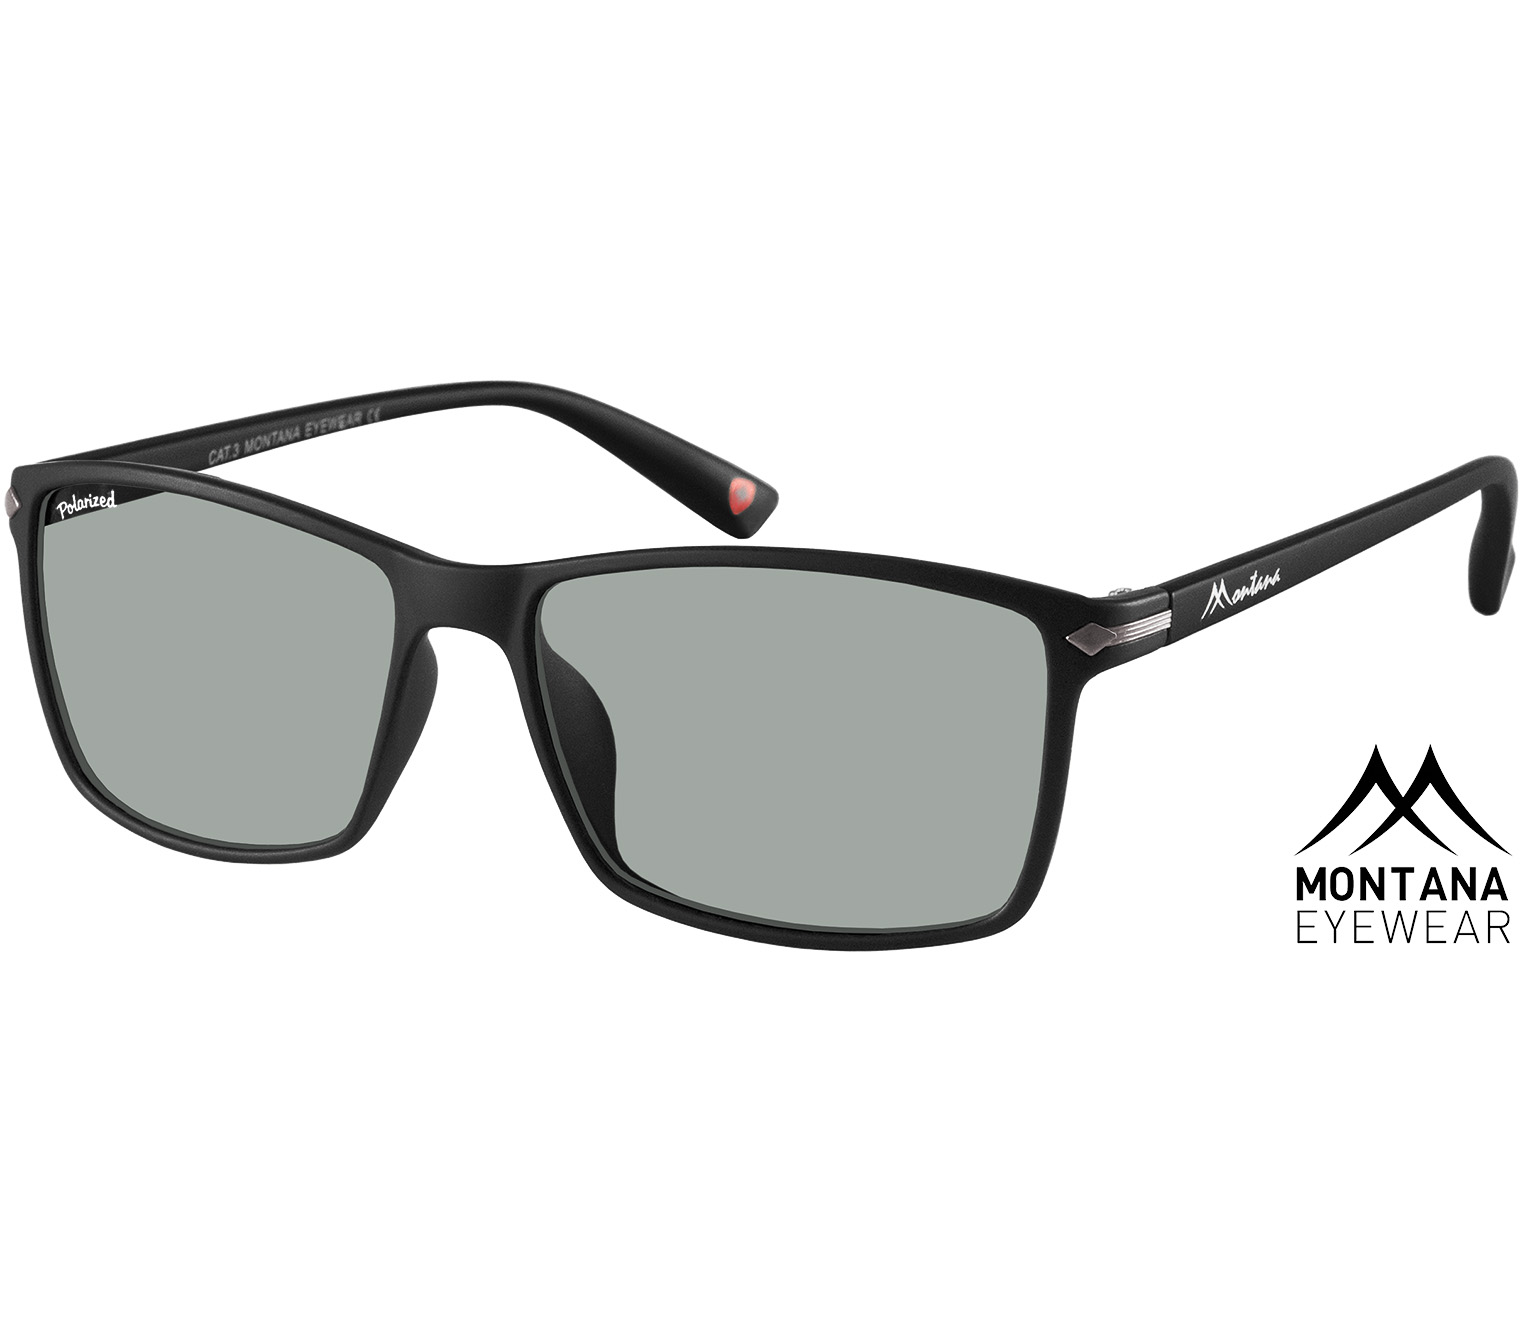 Main Image (Angle) - Horizon (Black) Sunglasses